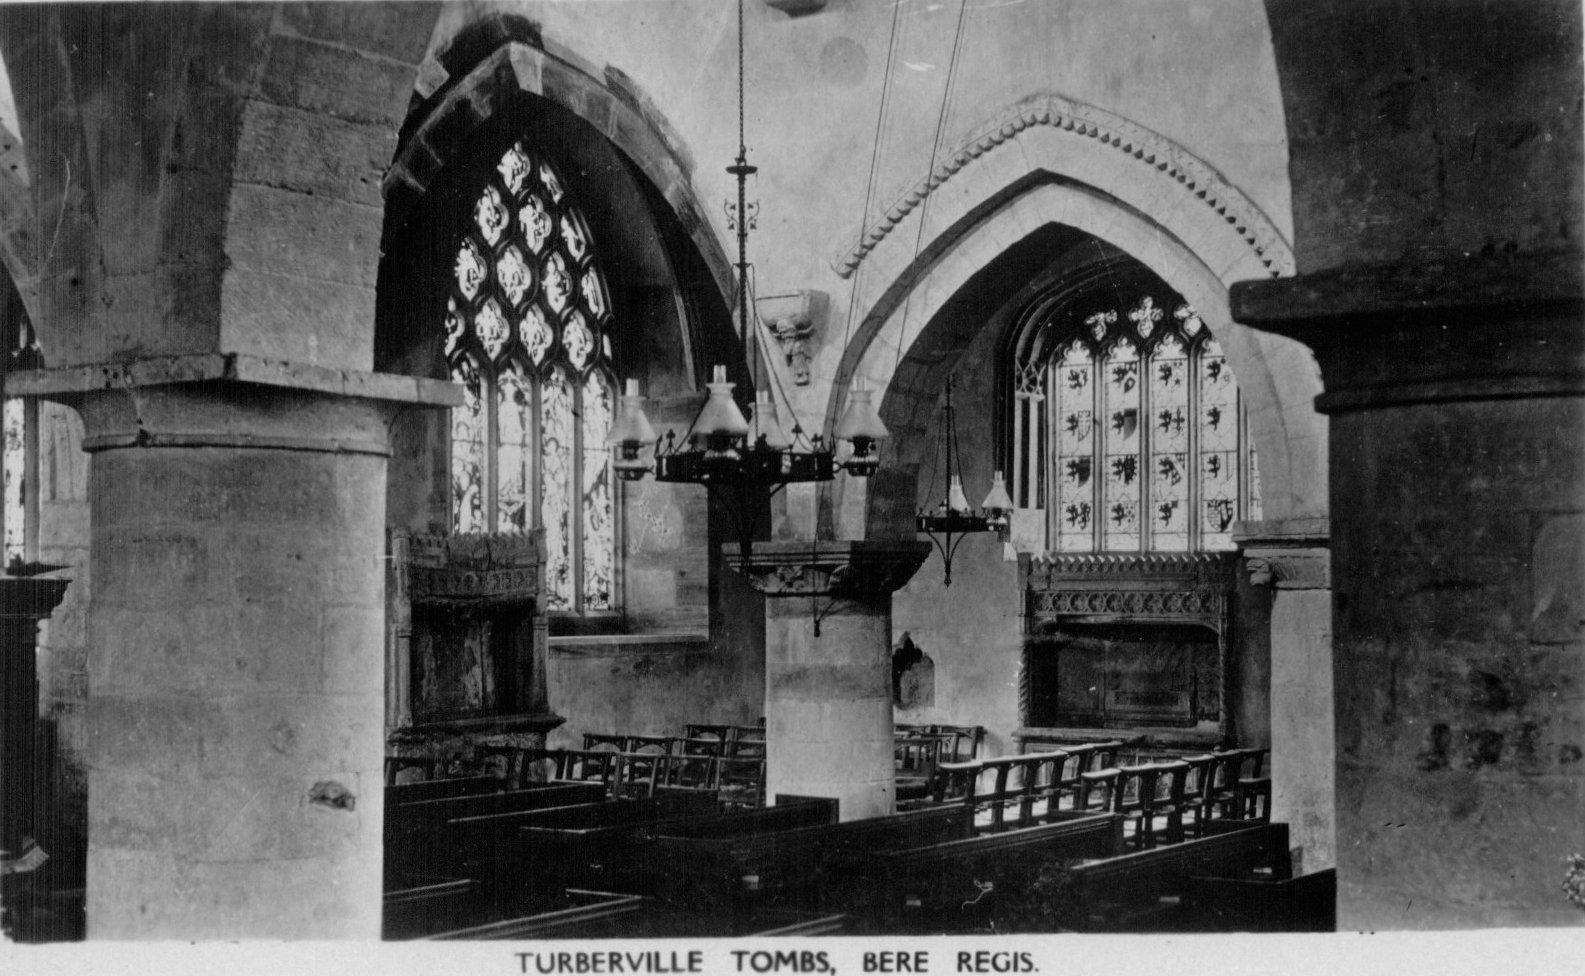 Turberville Tombs